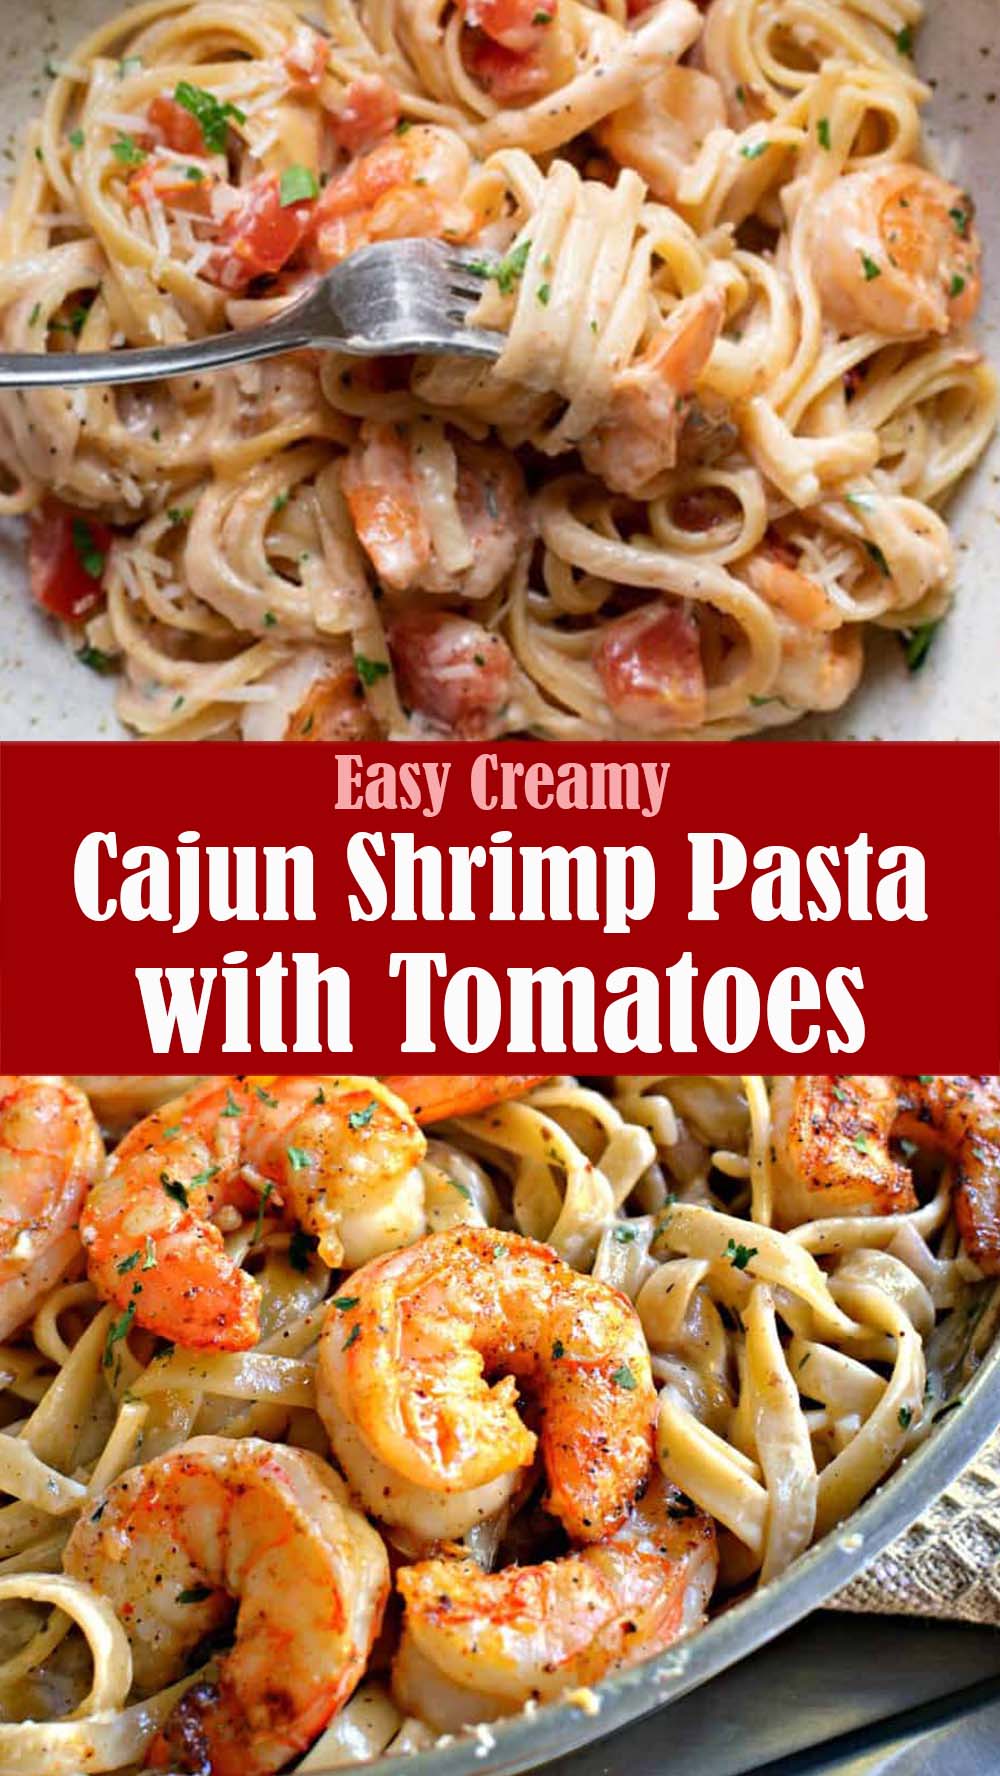 Easy Creamy Cajun Shrimp Pasta with Tomatoes